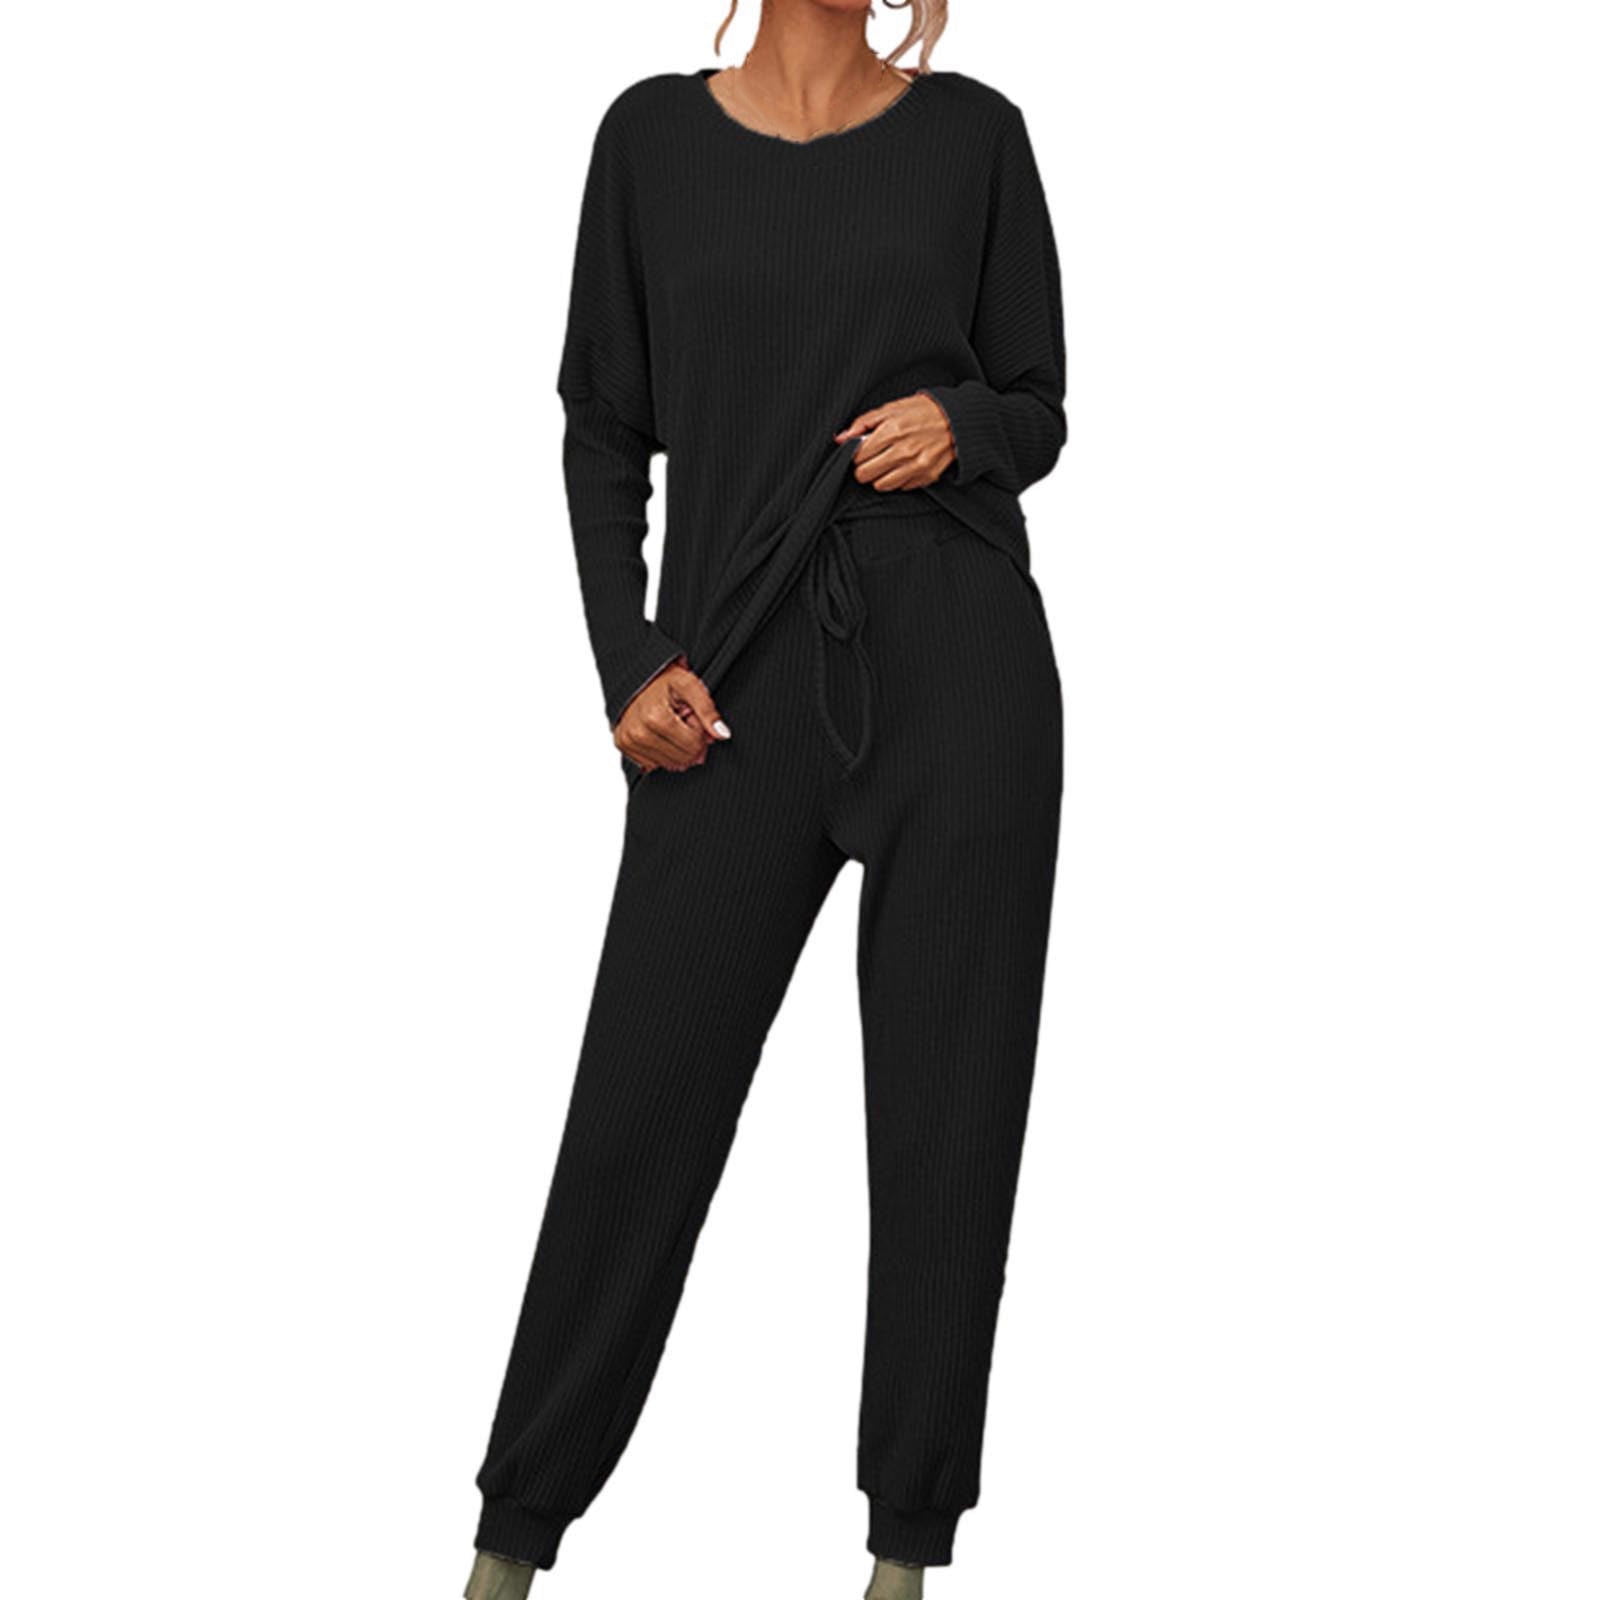  JELLYOGA Lounge Sets for Women 2 Piece Short Sleeve Long Pants  Matching Loungewear Pajama Set Sweatsuits Jogger Outfits (Black#5, S) :  Sports & Outdoors